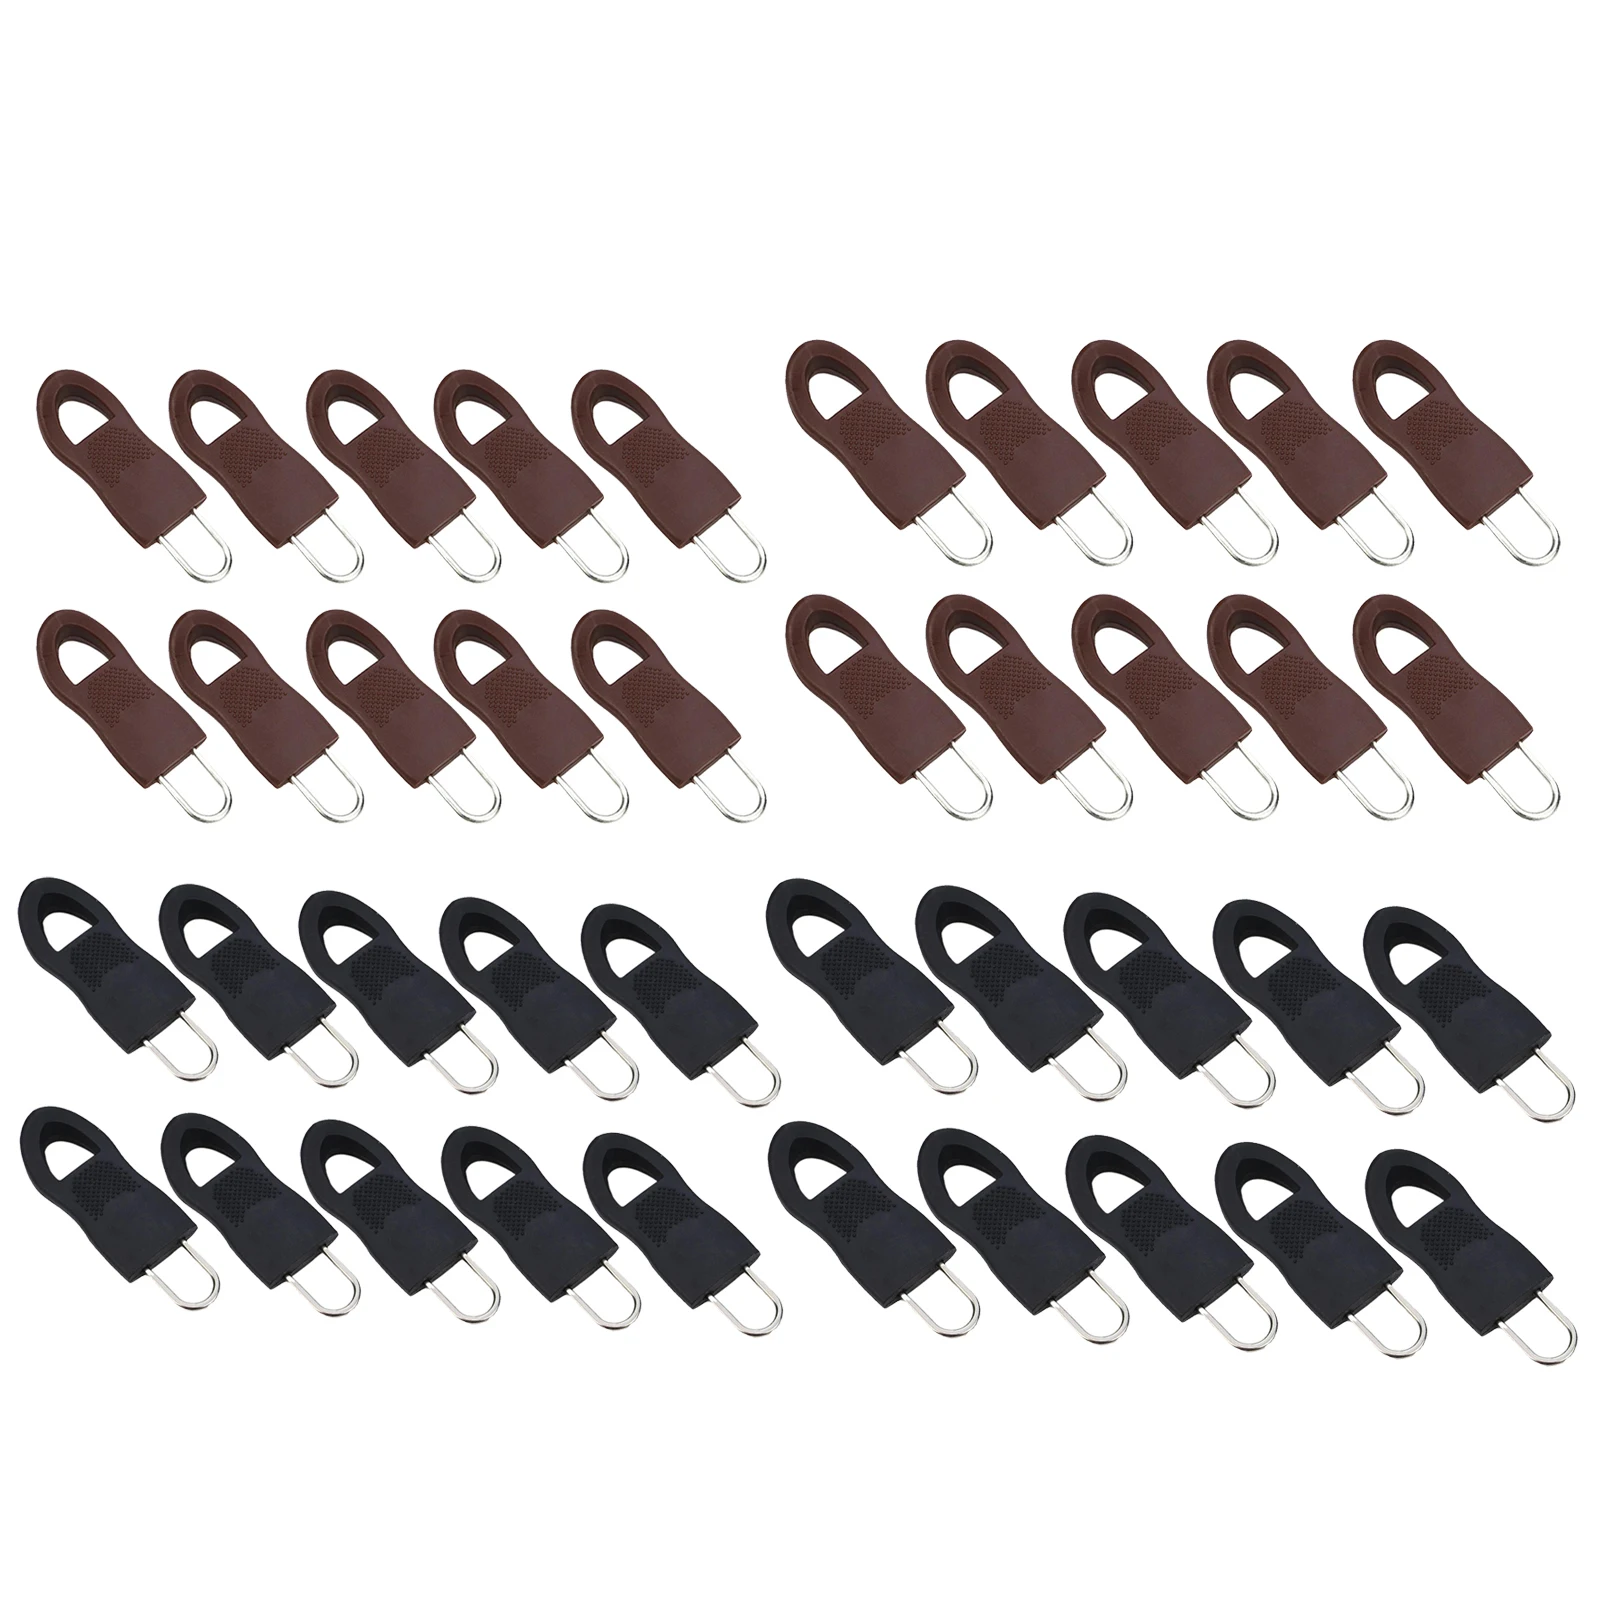 10Pcs Detachable Zip Fixer Replacement Zipper Tags Repair Pull Tab, Universal Detachable Zipper Puller Set